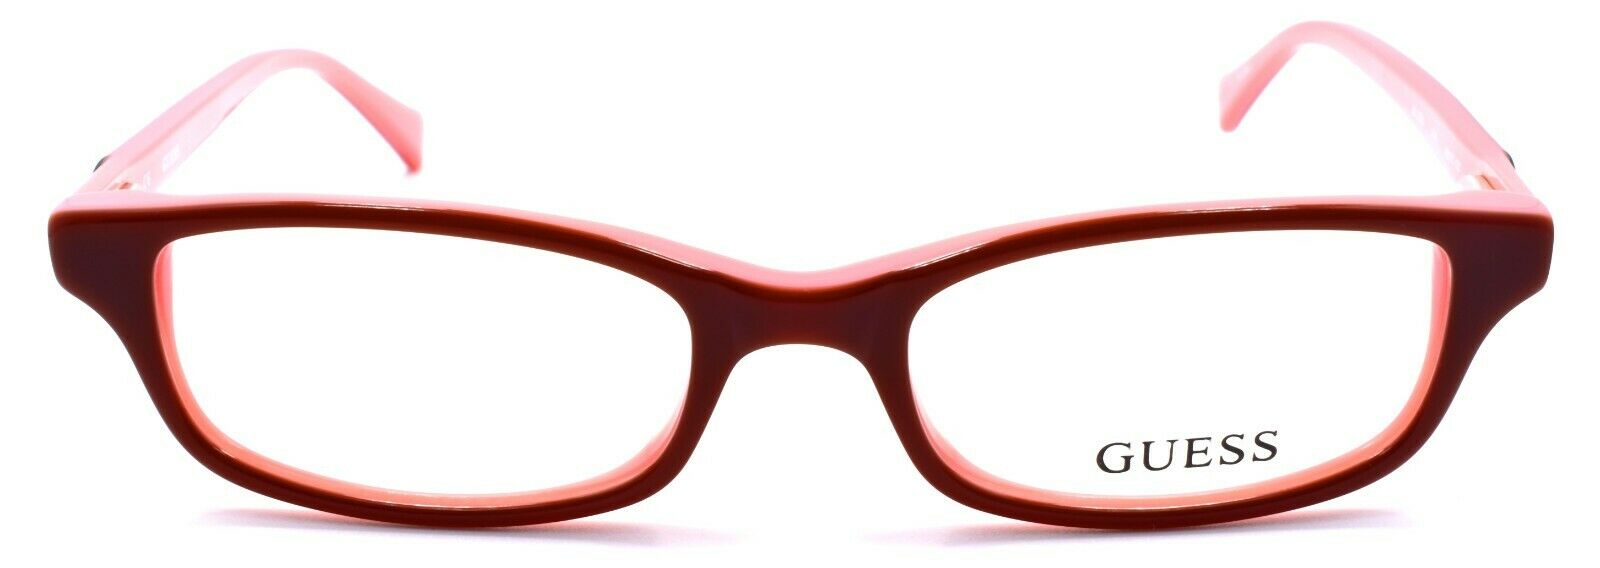 2-GUESS GU2292 048 Women's Eyeglasses Frames Petite 48-17-135 Brown / Pink-664689761937-IKSpecs